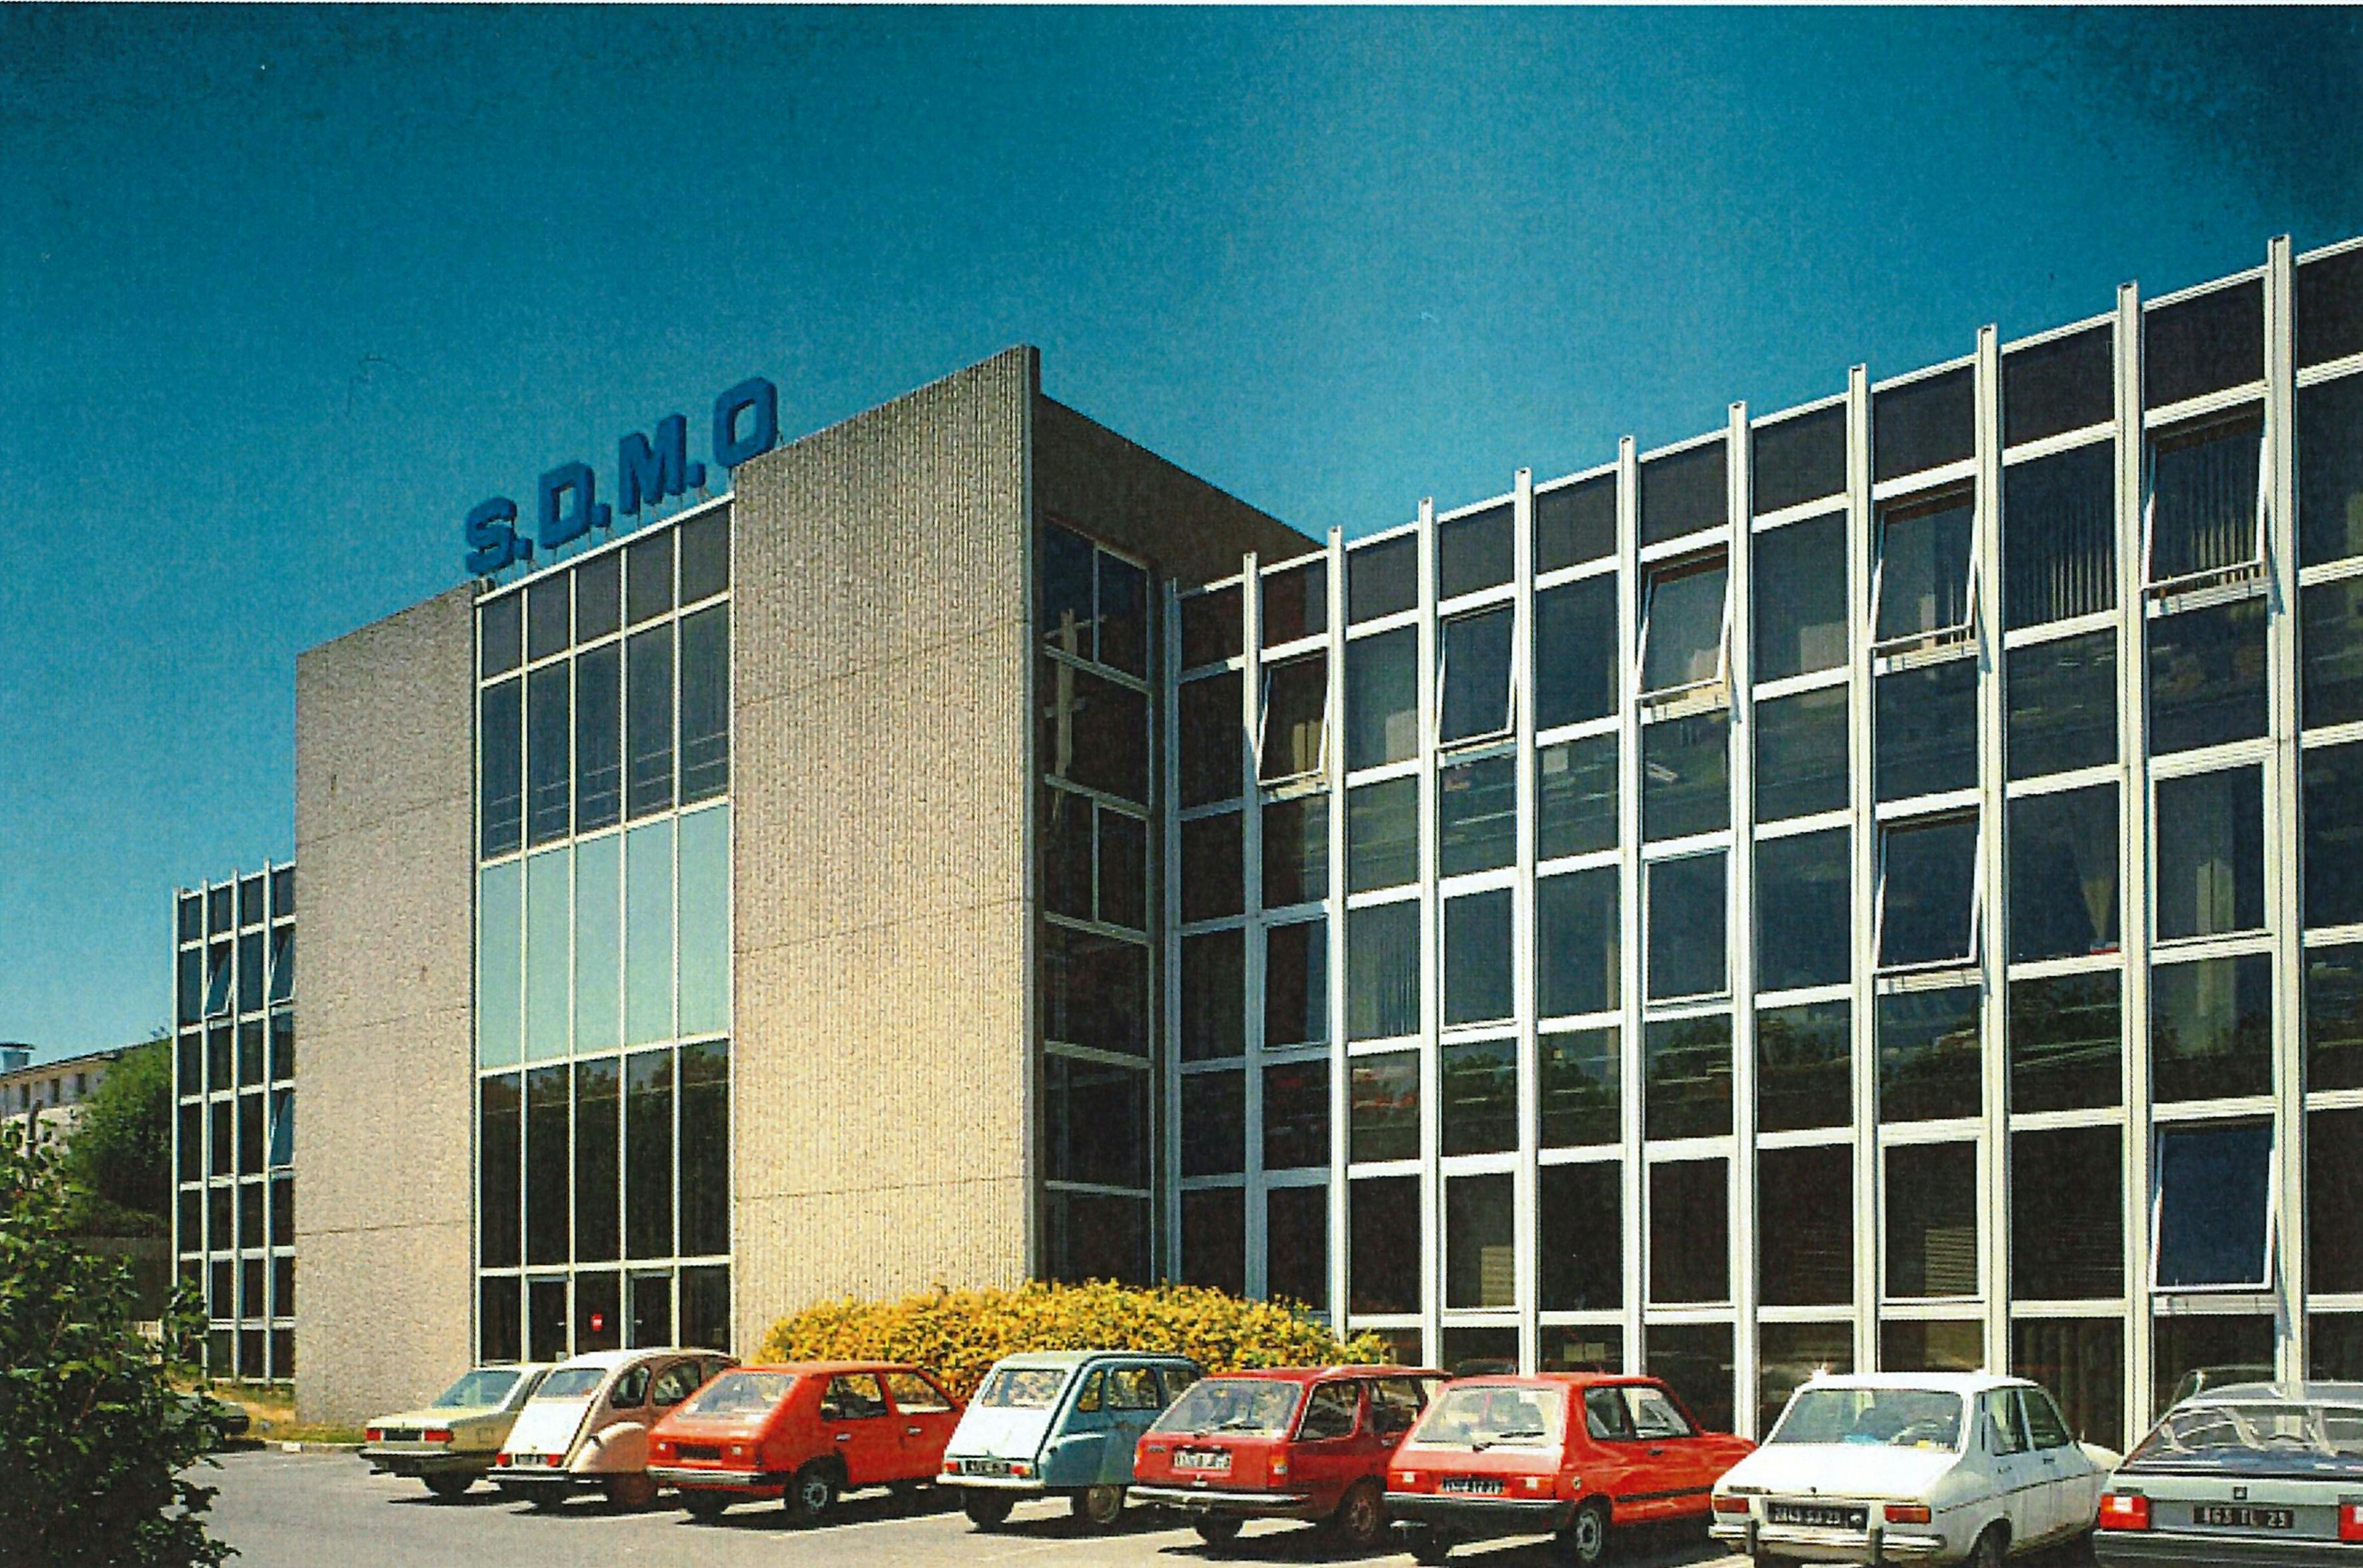 SDMO headquarter until 2015 in Brest rue de Villeneuve